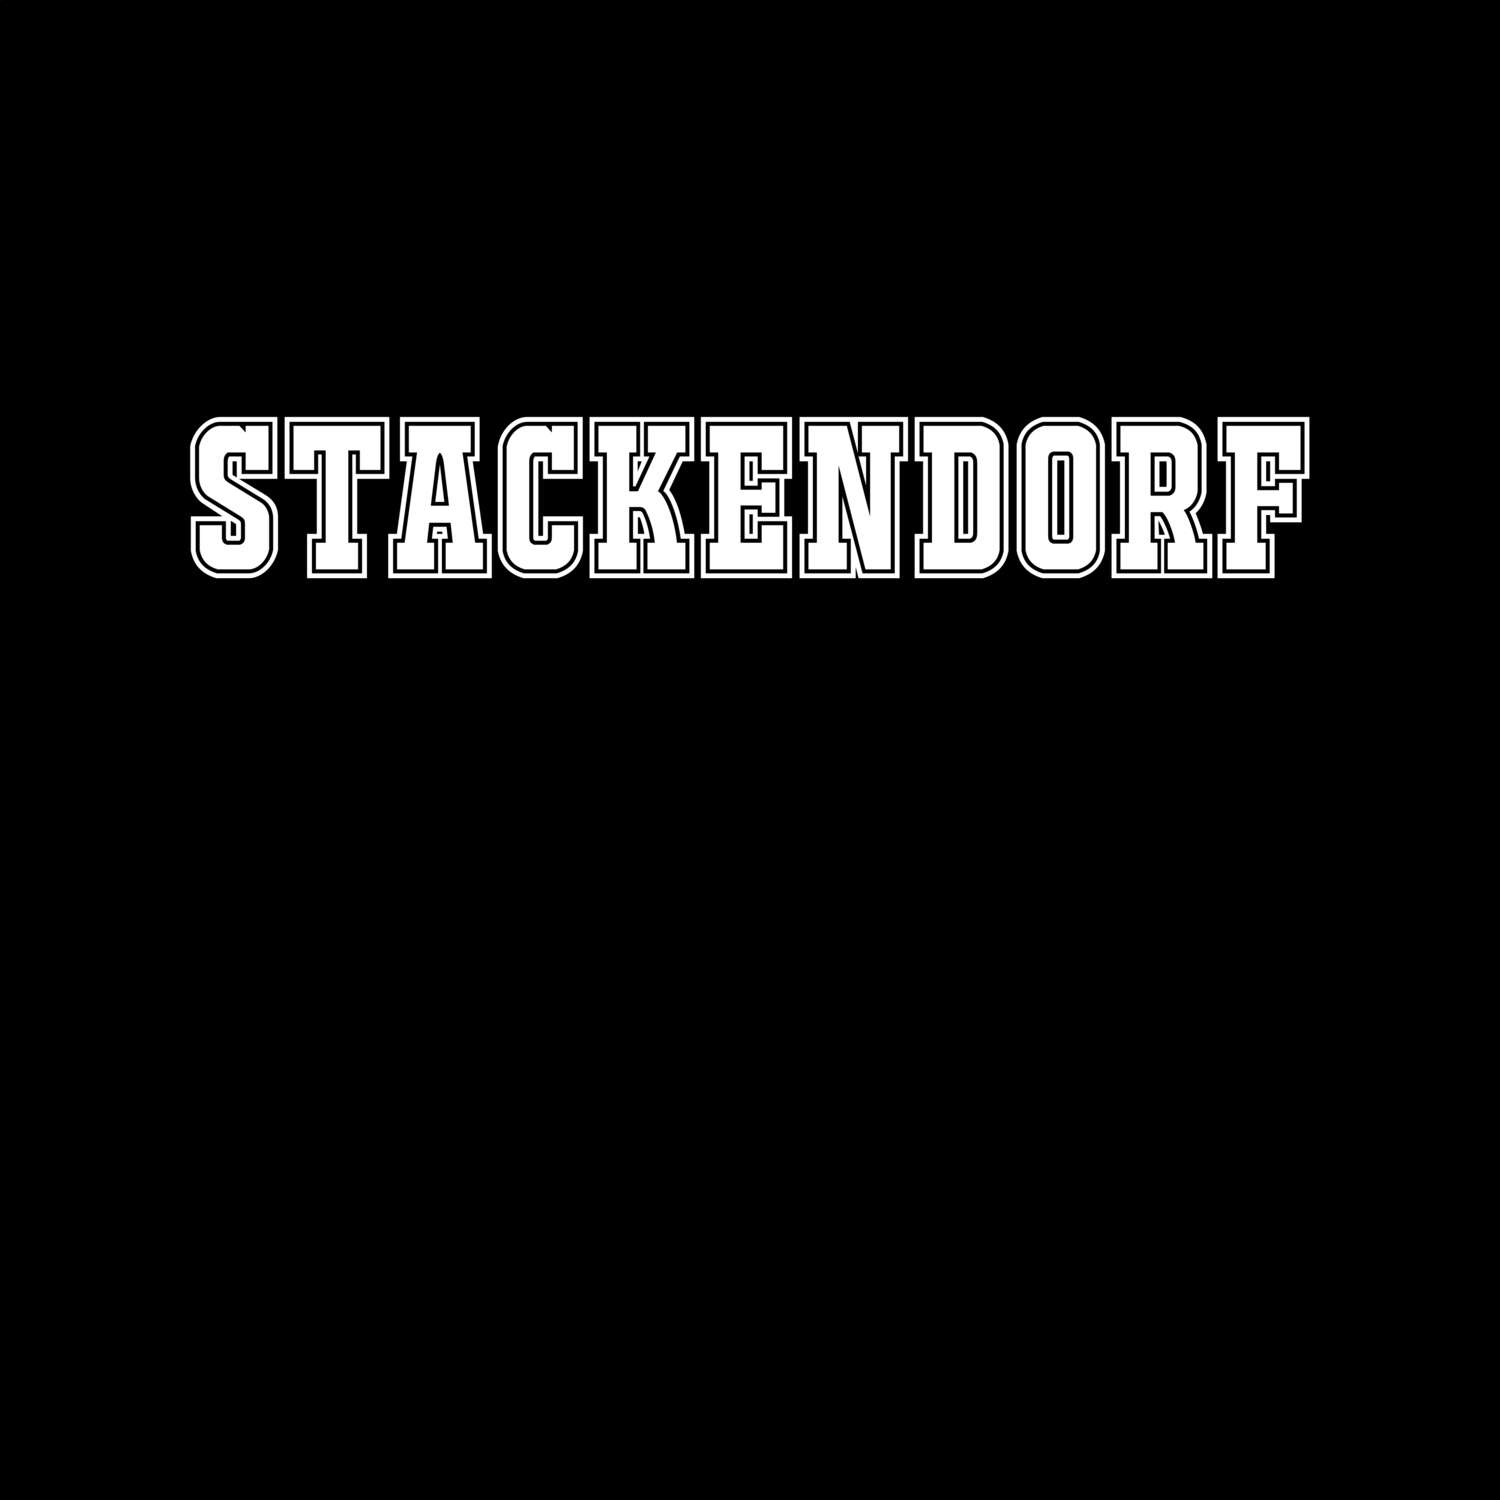 Stackendorf T-Shirt »Classic«